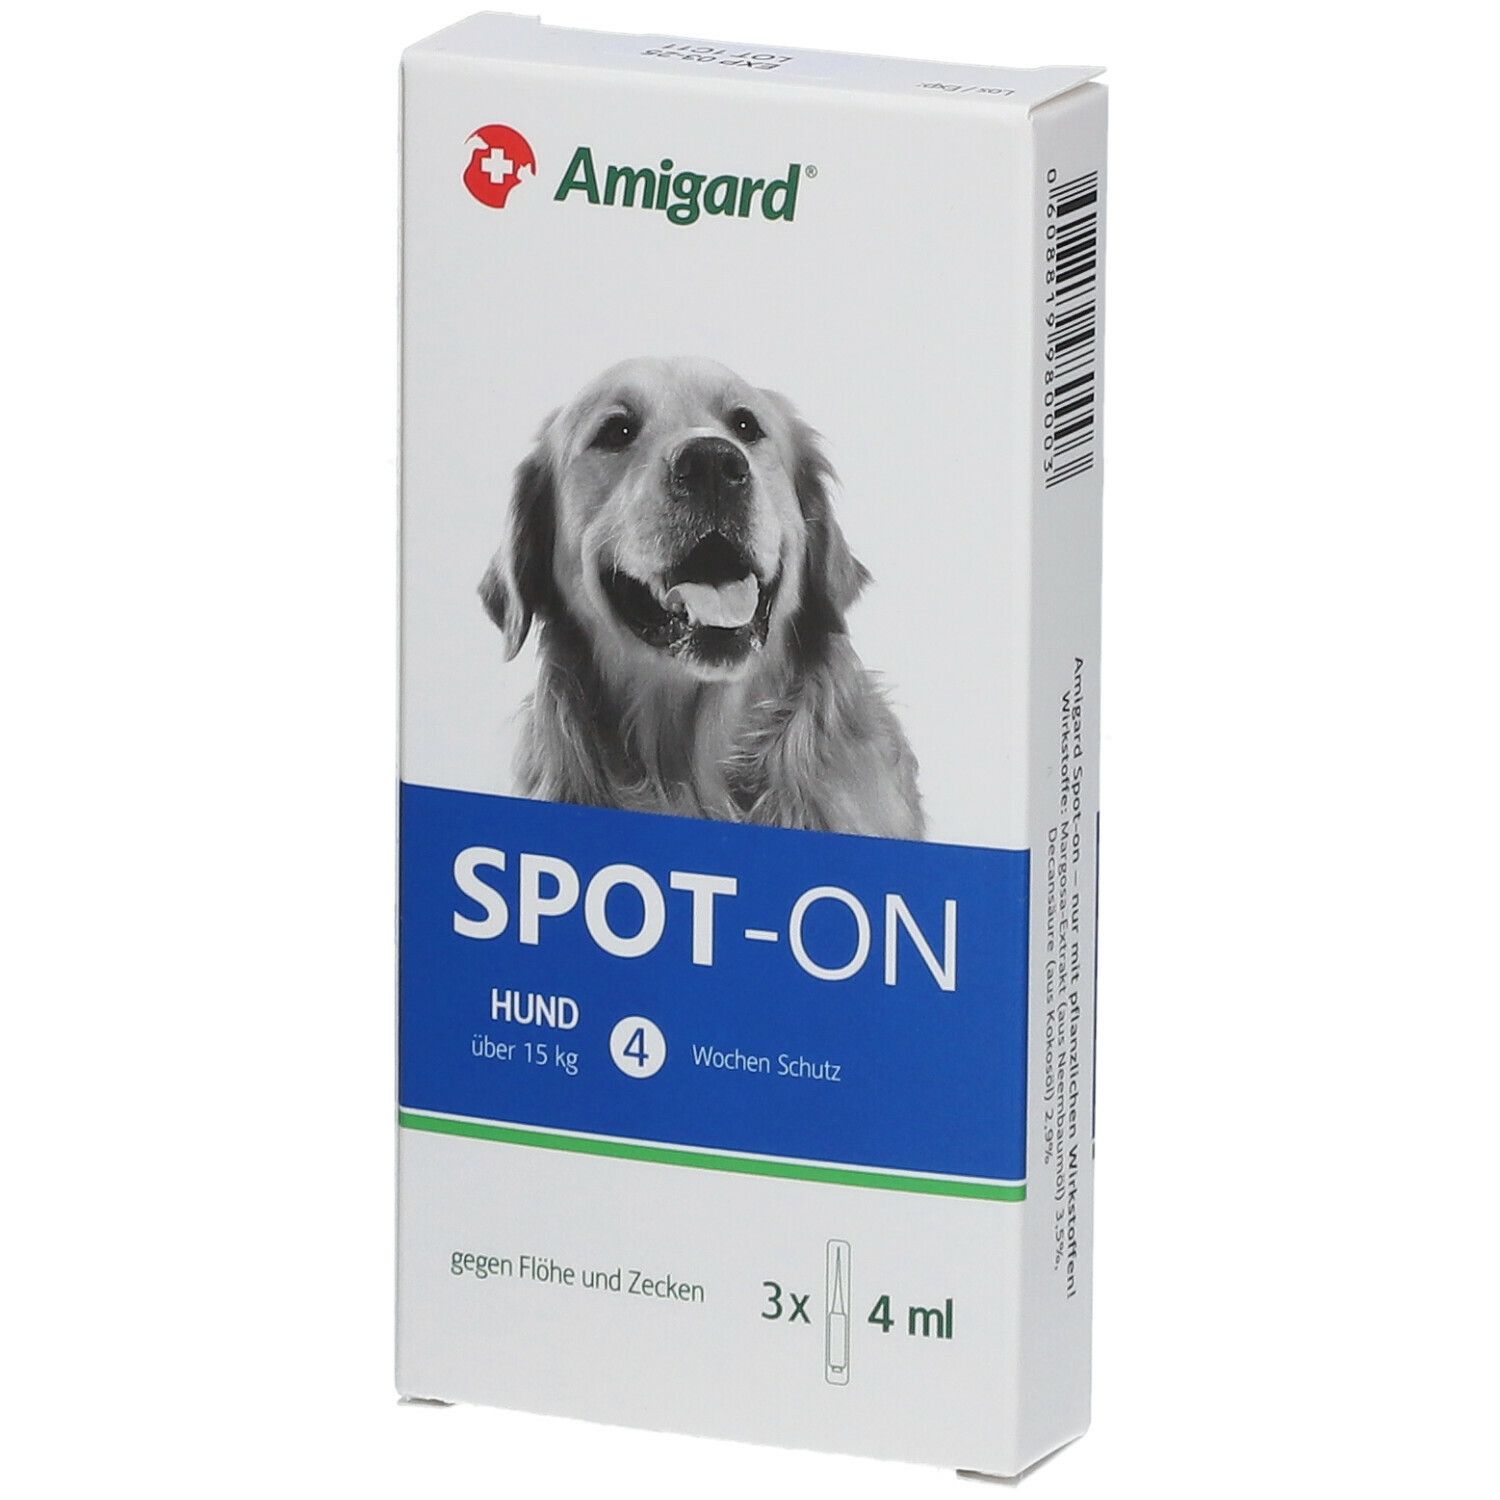 Amigard® Spot-On für Hunde über 15 kg